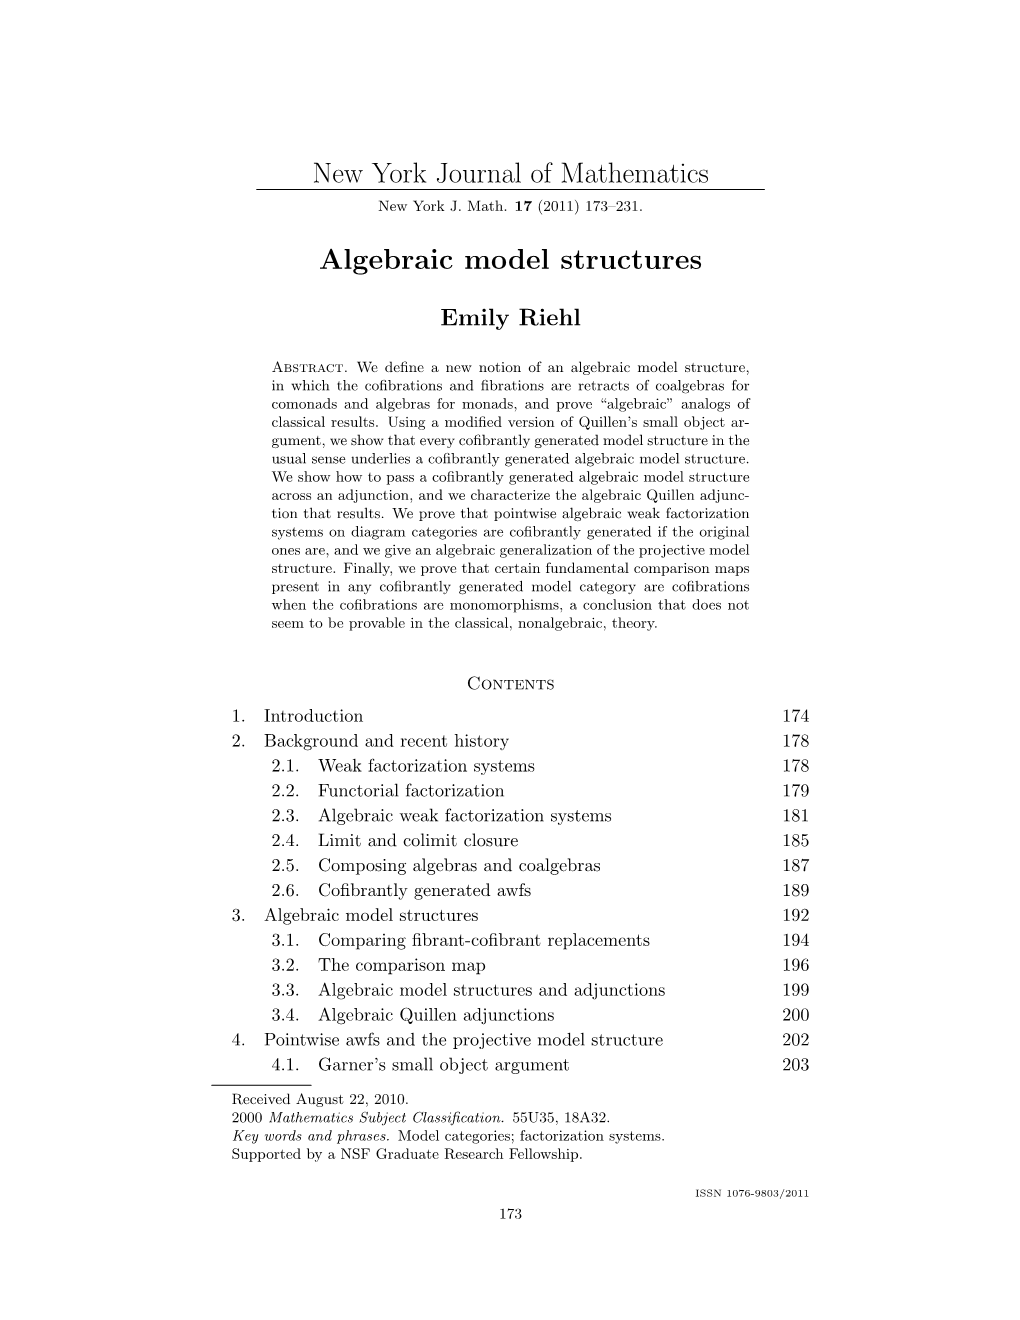 New York Journal of Mathematics Algebraic Model Structures